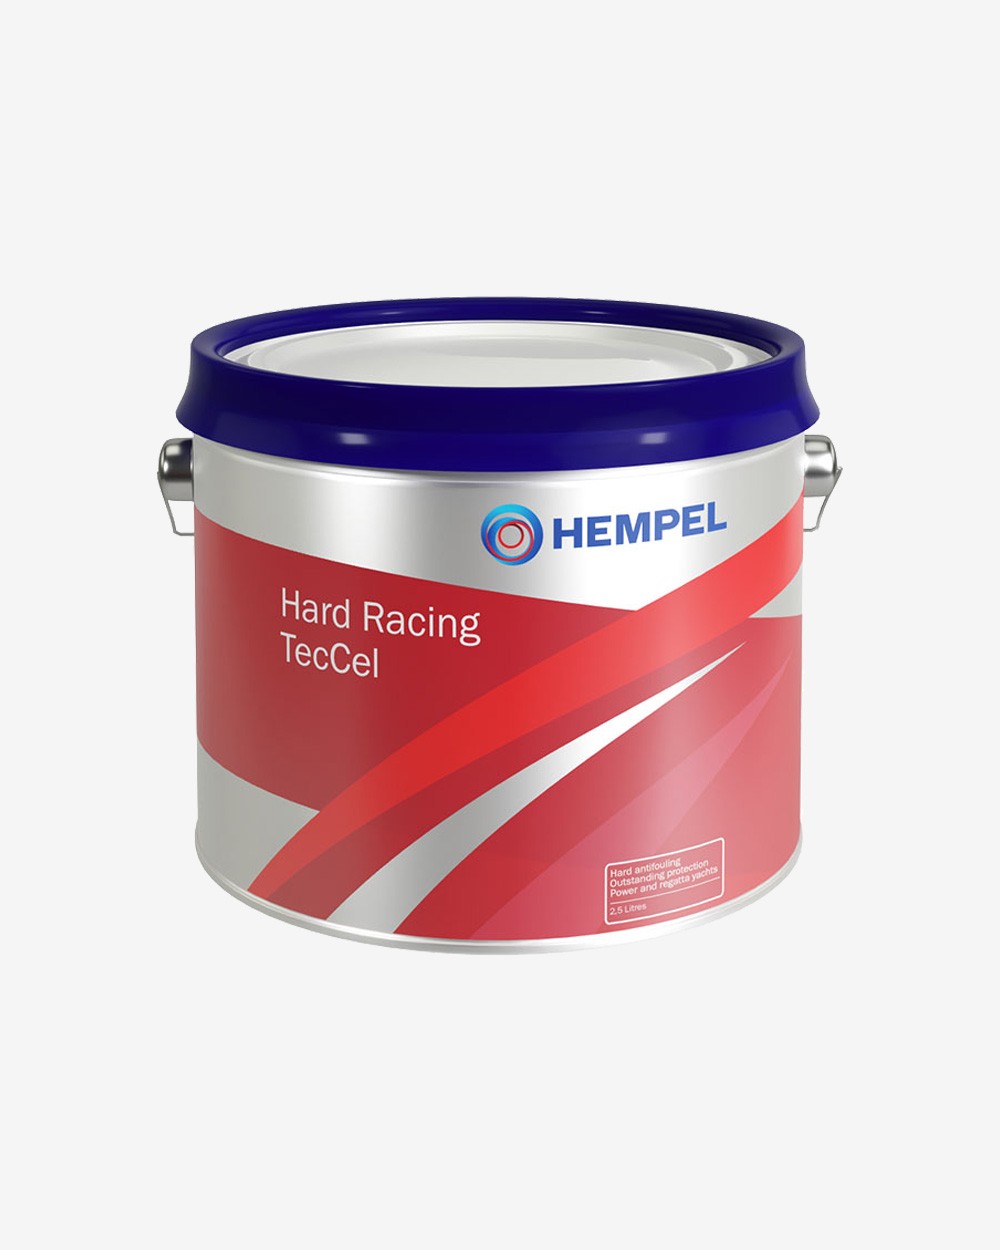 Hempel Hard Racing TecCel, 2.5 liter